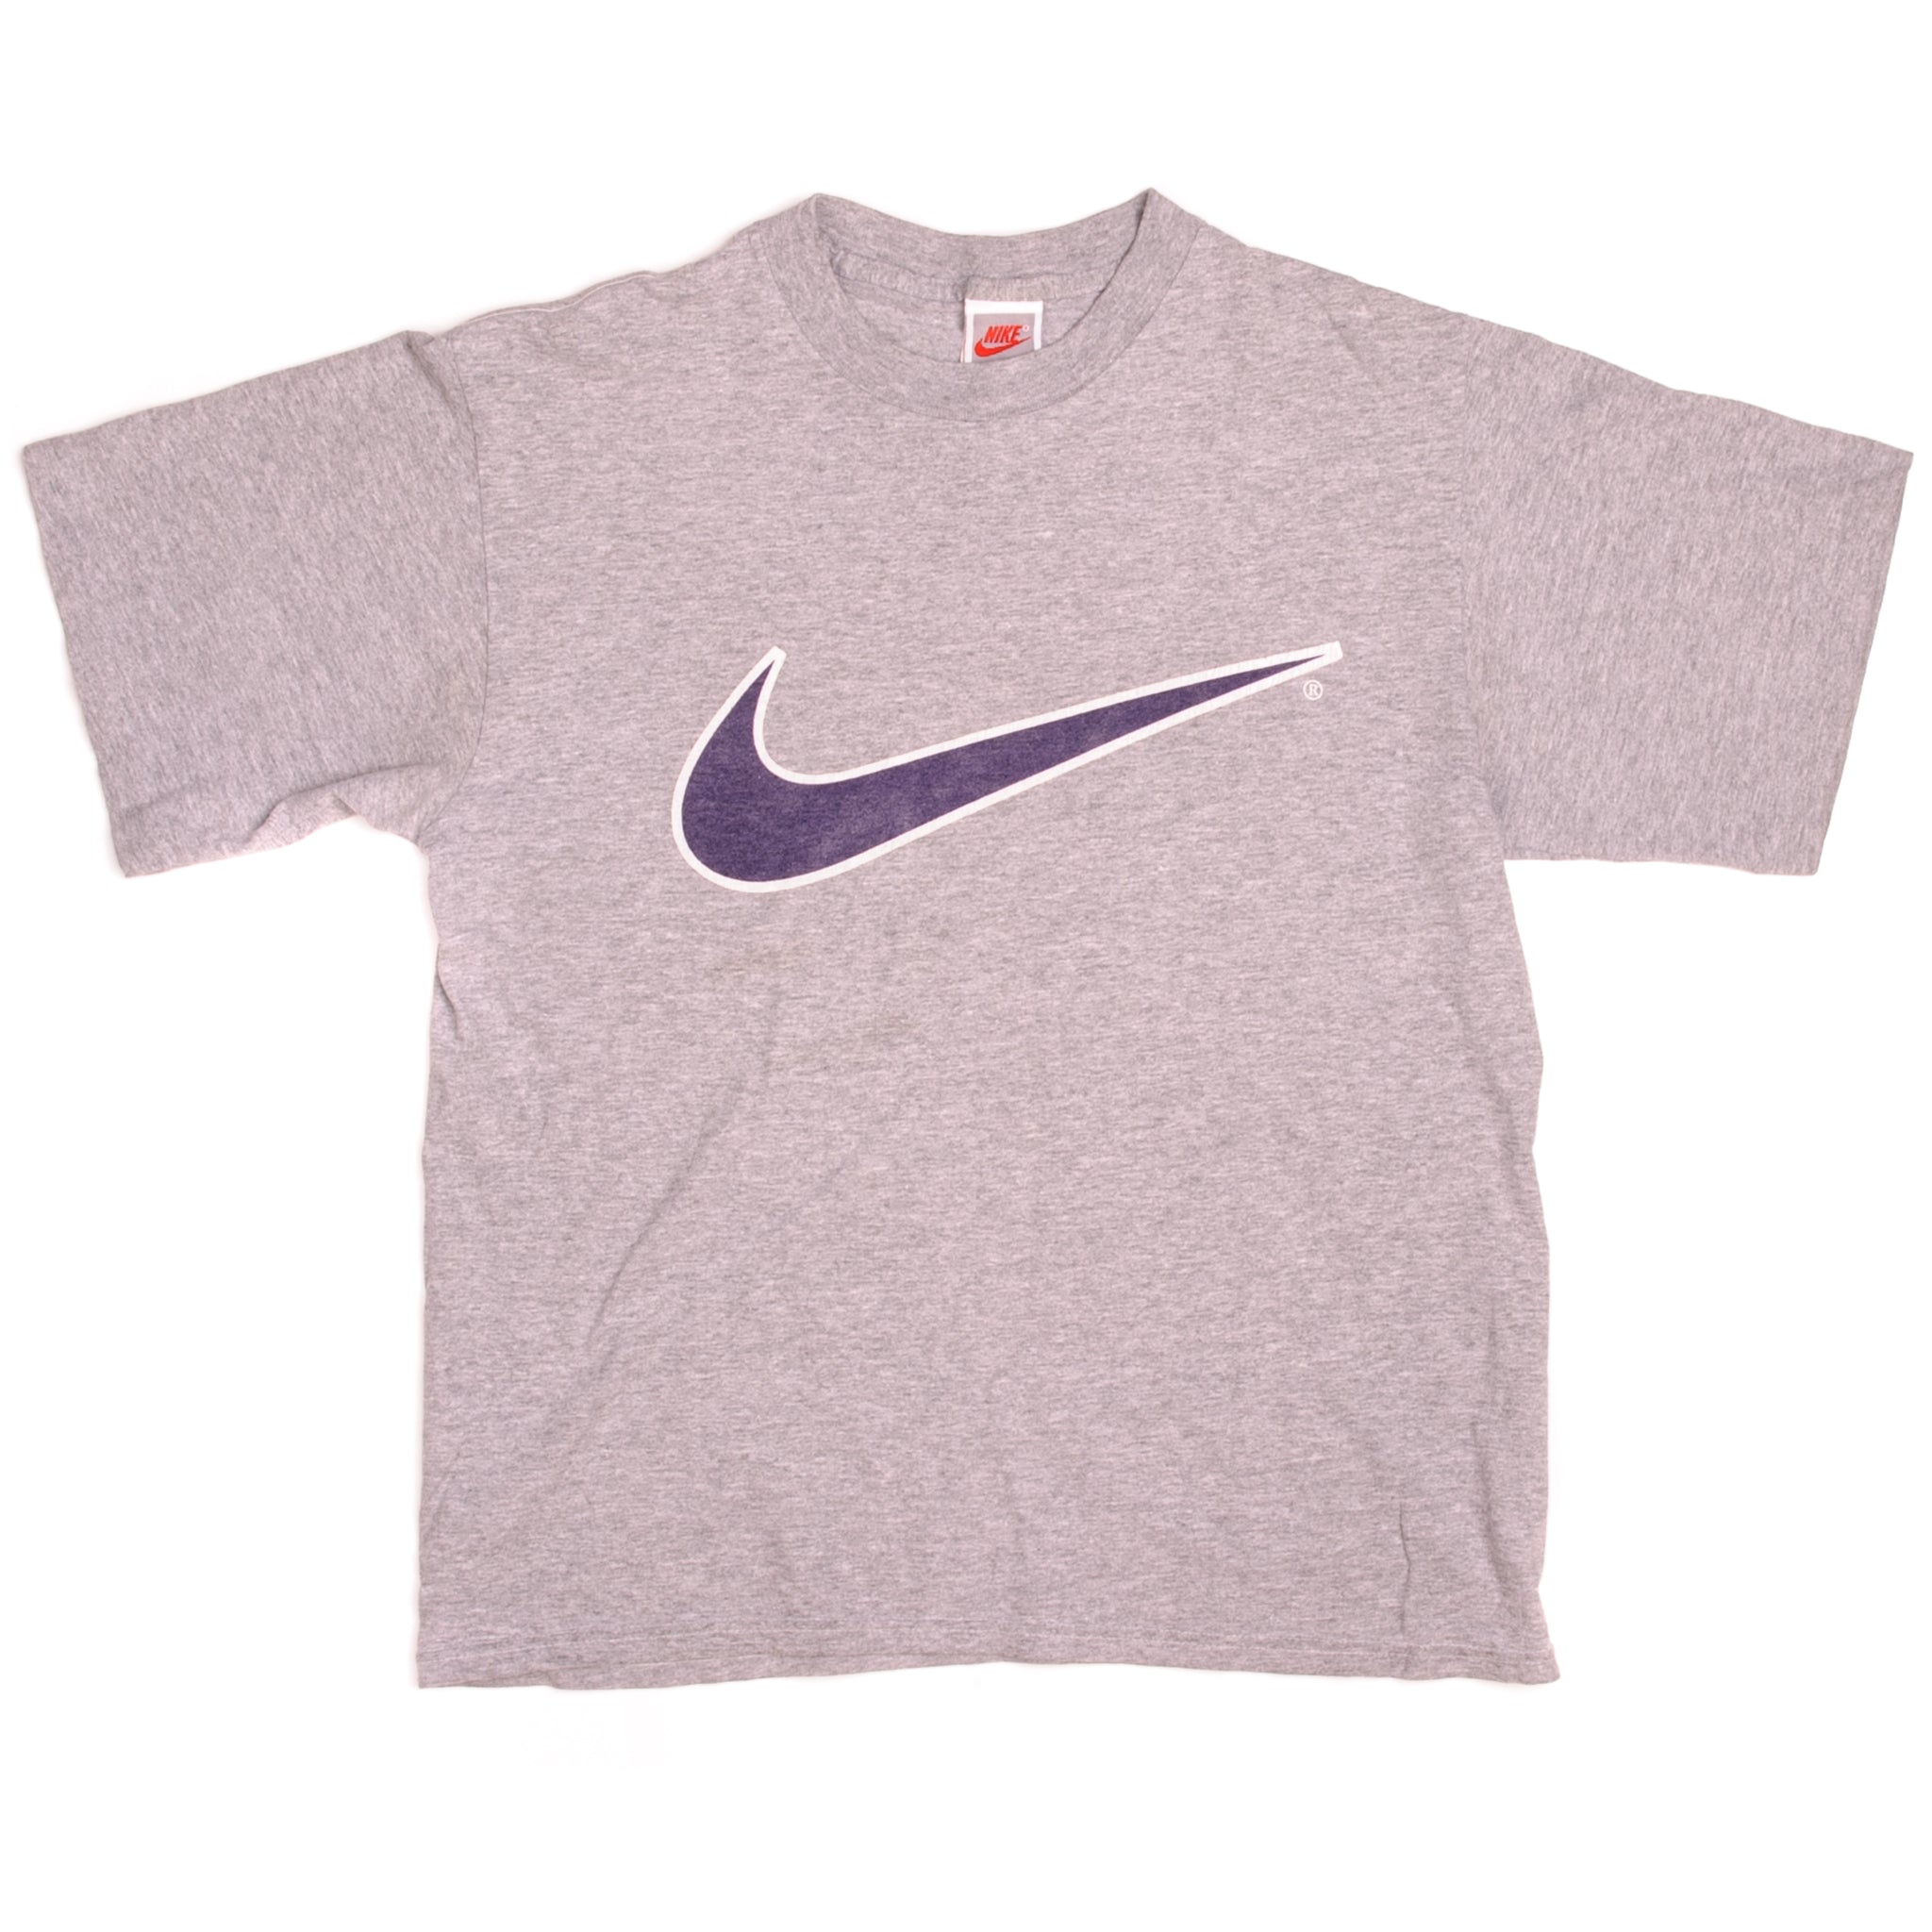 Vintage Nike Big Swoosh Tee Shirt 1987-1994 Size Large Made in USA